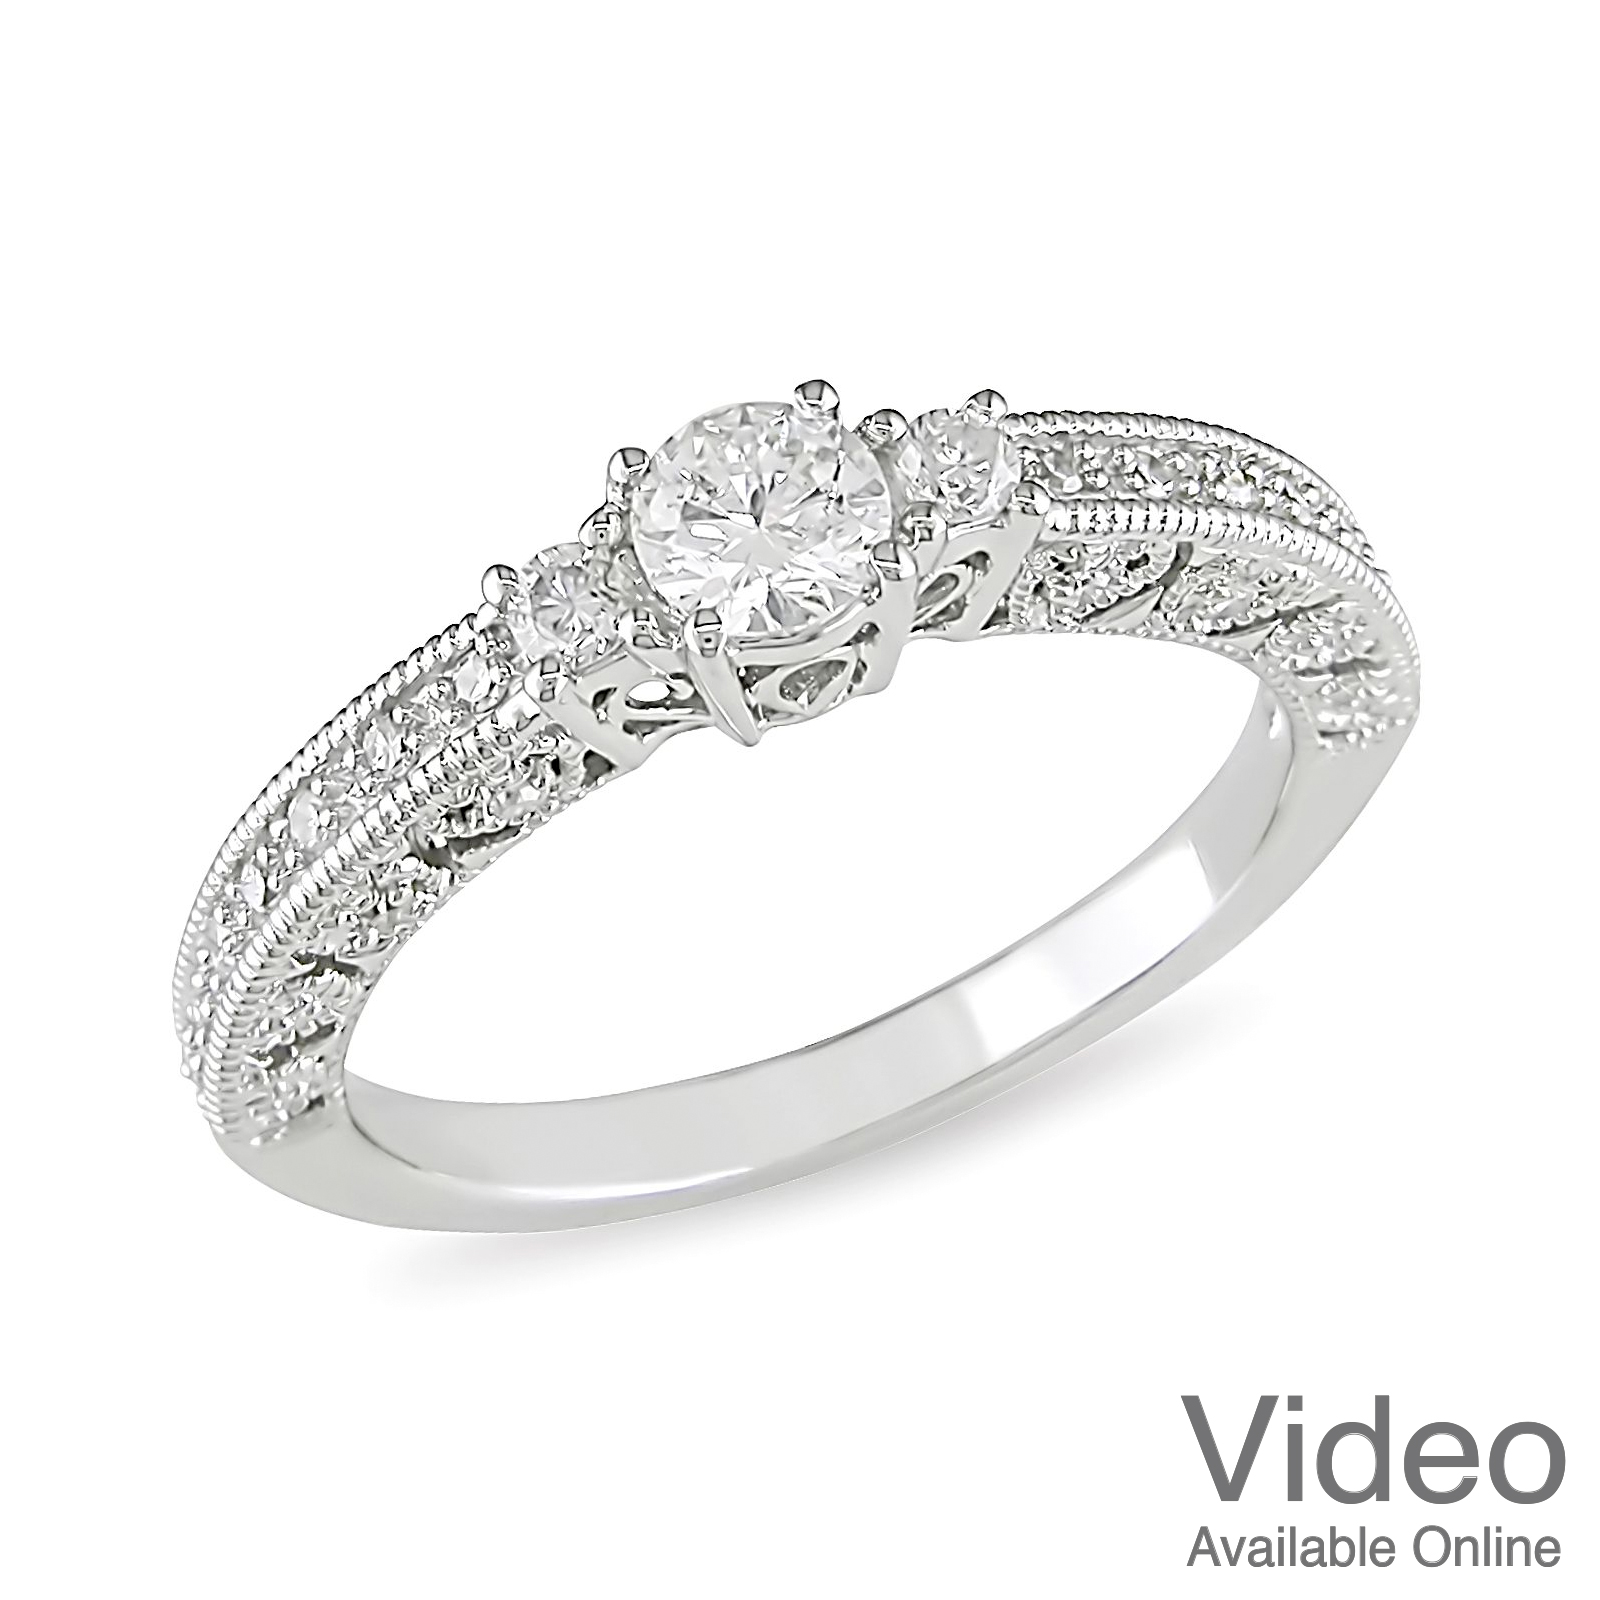 1/2 CTTW Diamond Engagement Ring in 10k White Gold